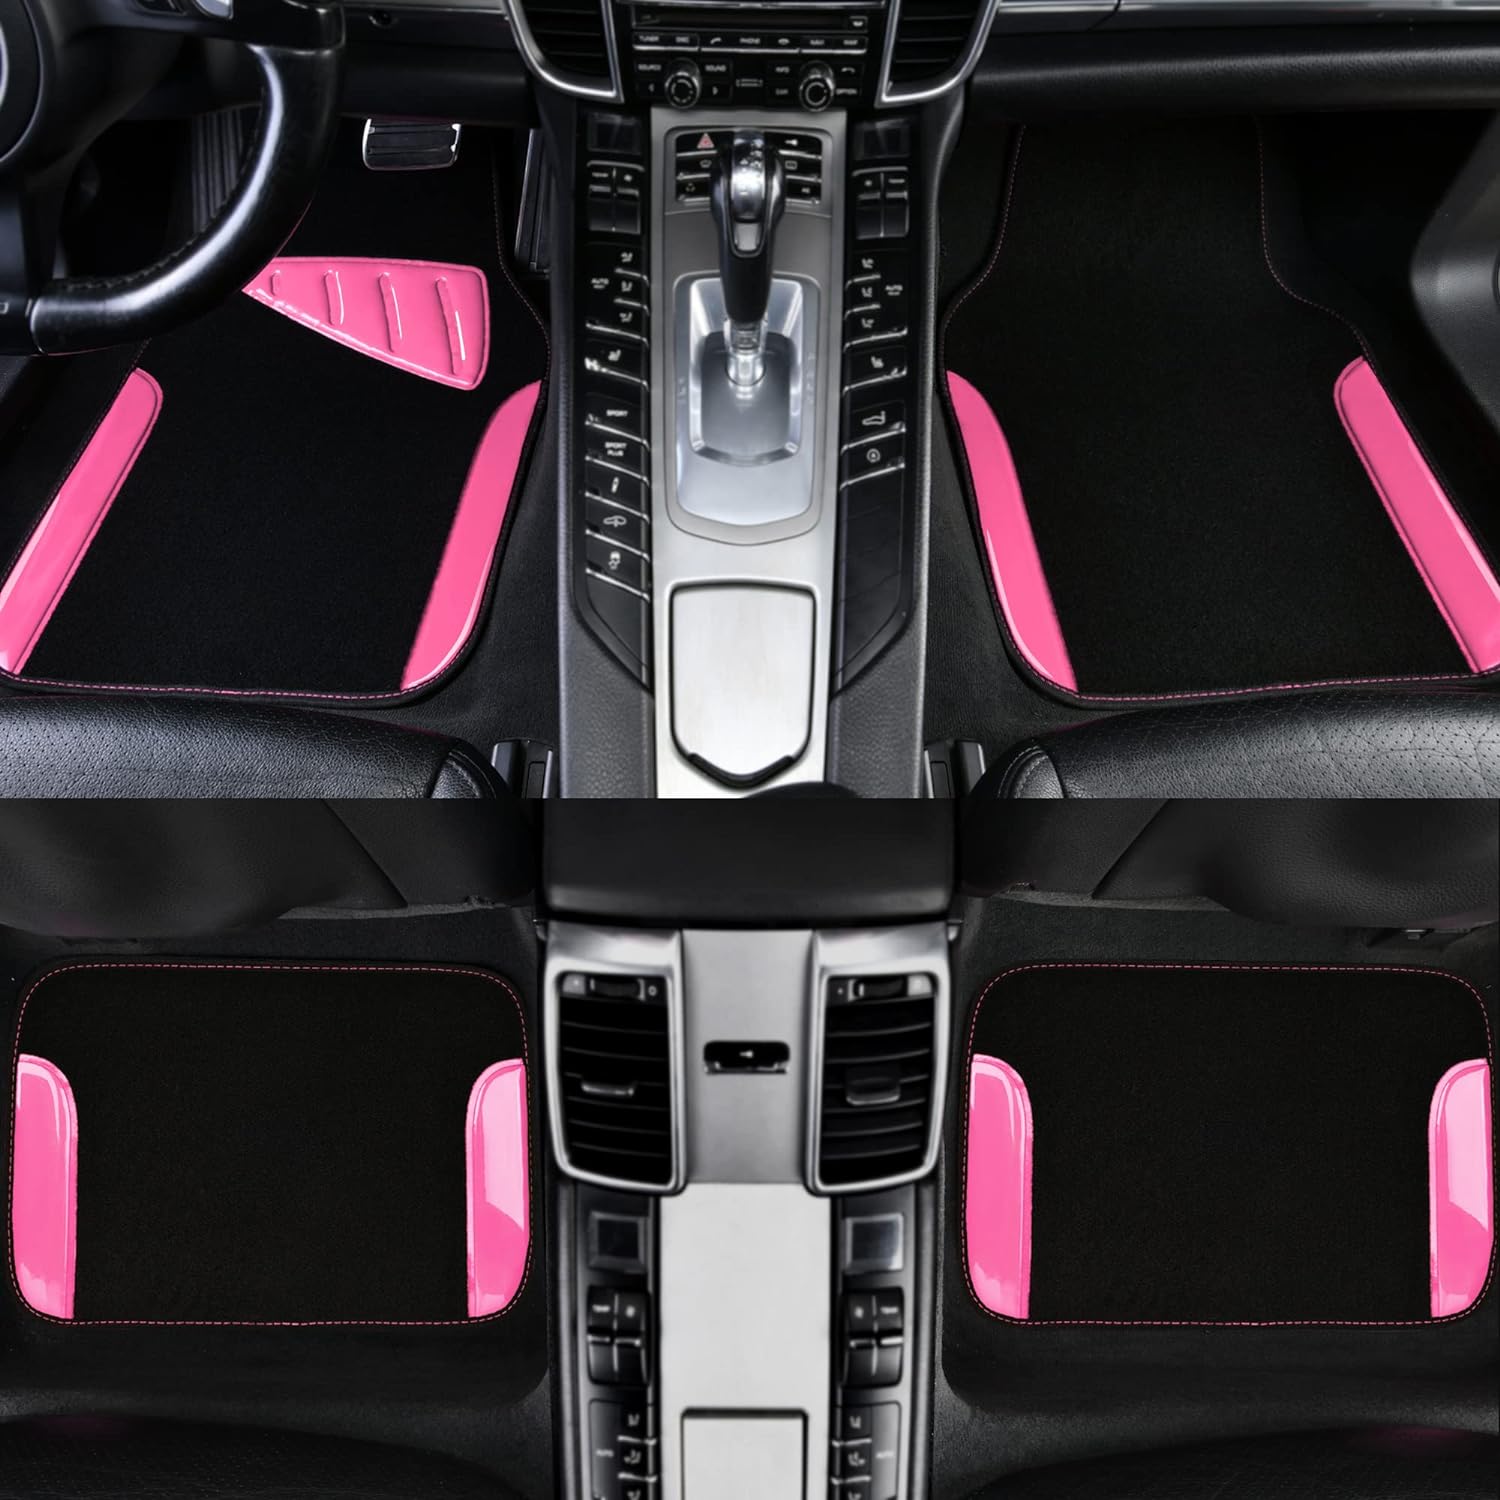 CAR PASS Jelly Waterproof Universal Fit Car Floor Mats, Girly Car Carpet Mats with Anti-Slip Nibbs Backing & Driver Heel Pad Fit for SUV, Vans, sedans, Cute car mats of 4pcs for Women (Light Pink)